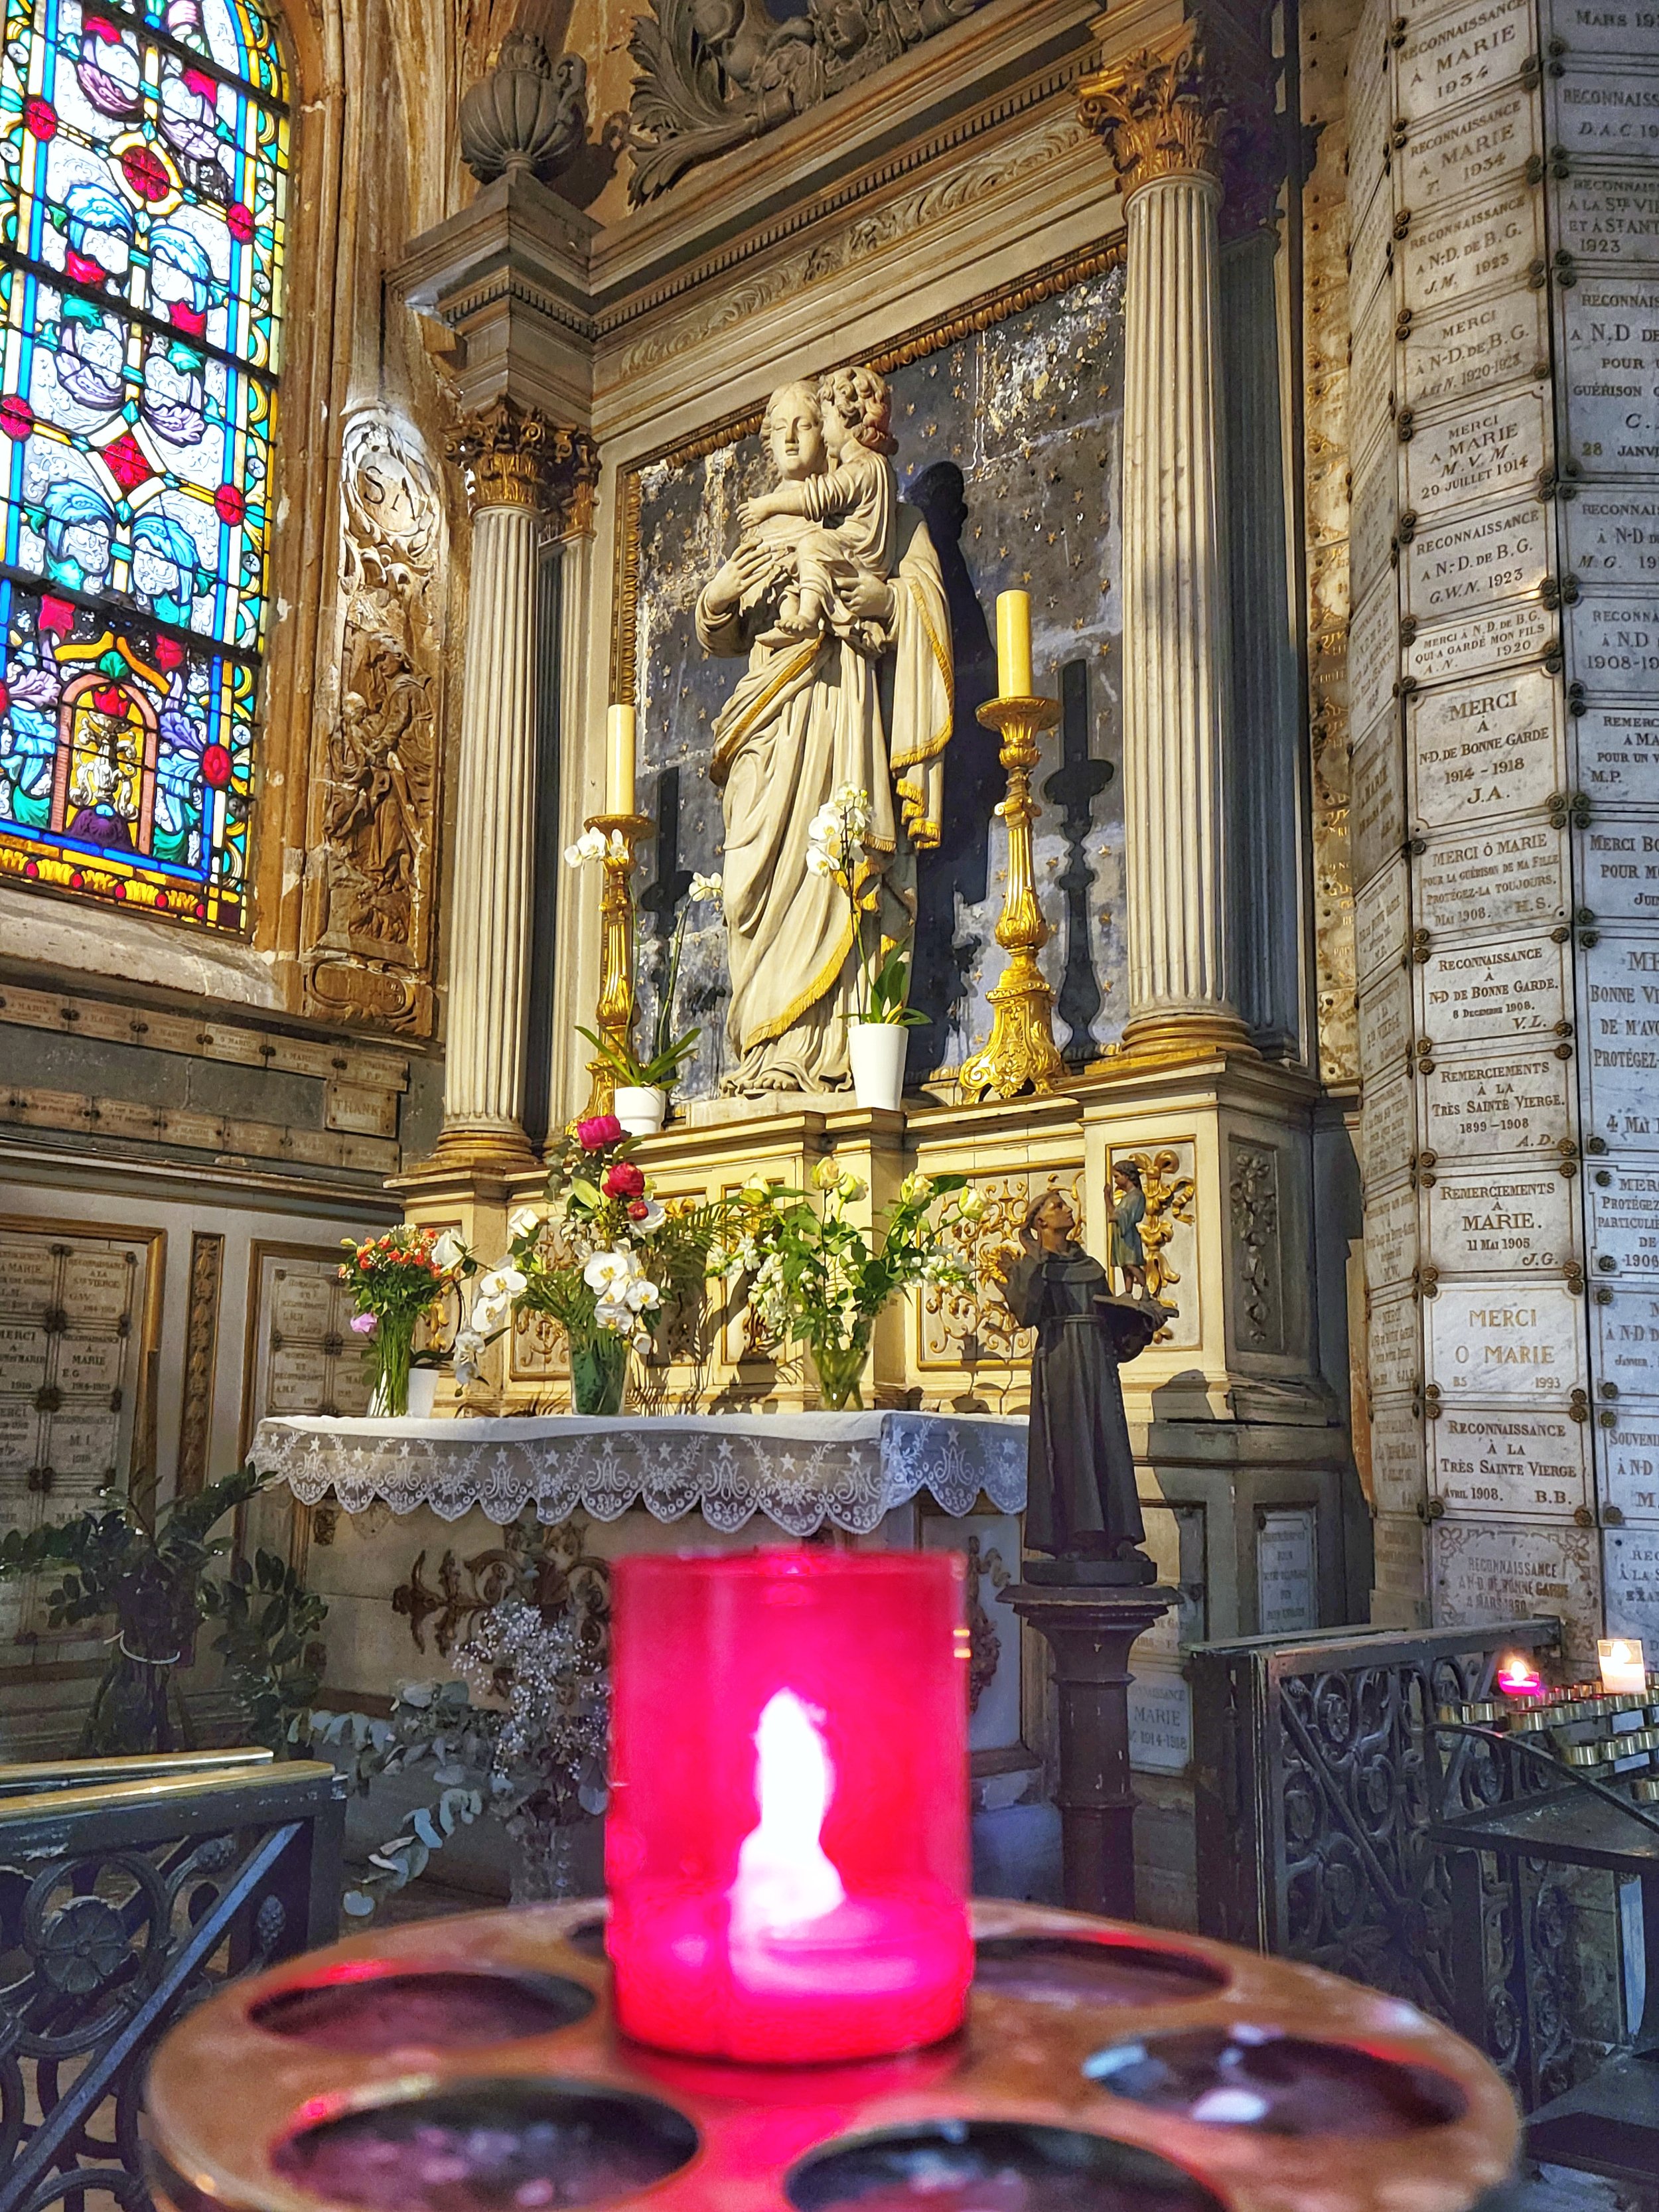 Inside the church of Saint-Germain 